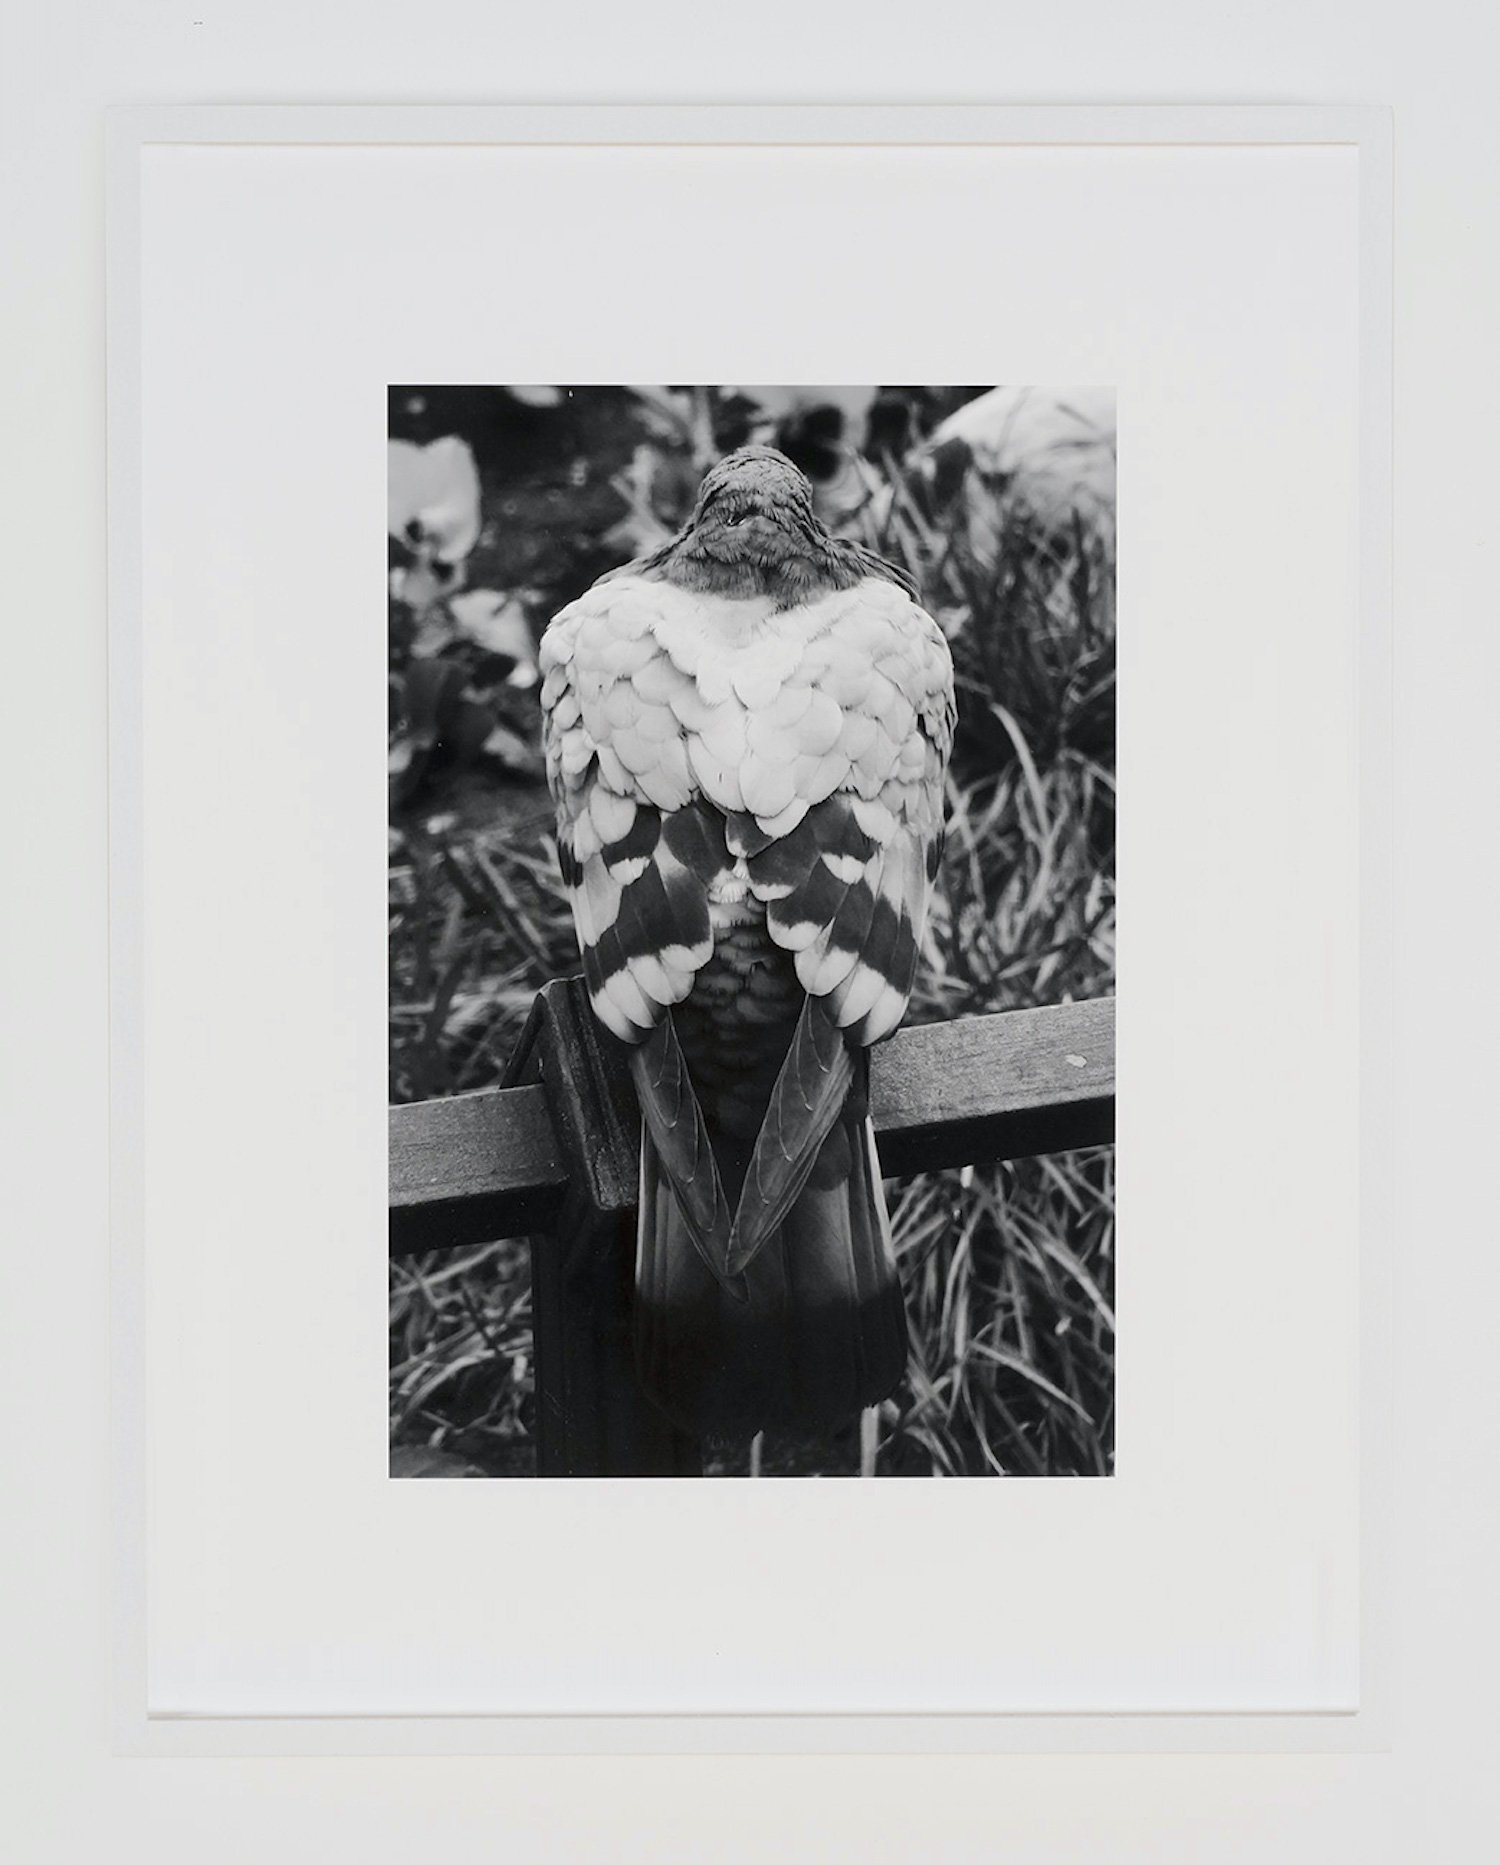  pigeon 2021  28 x 36 cm, archival pigment print on cotton rag (ed. of 3 + 1 ap) 